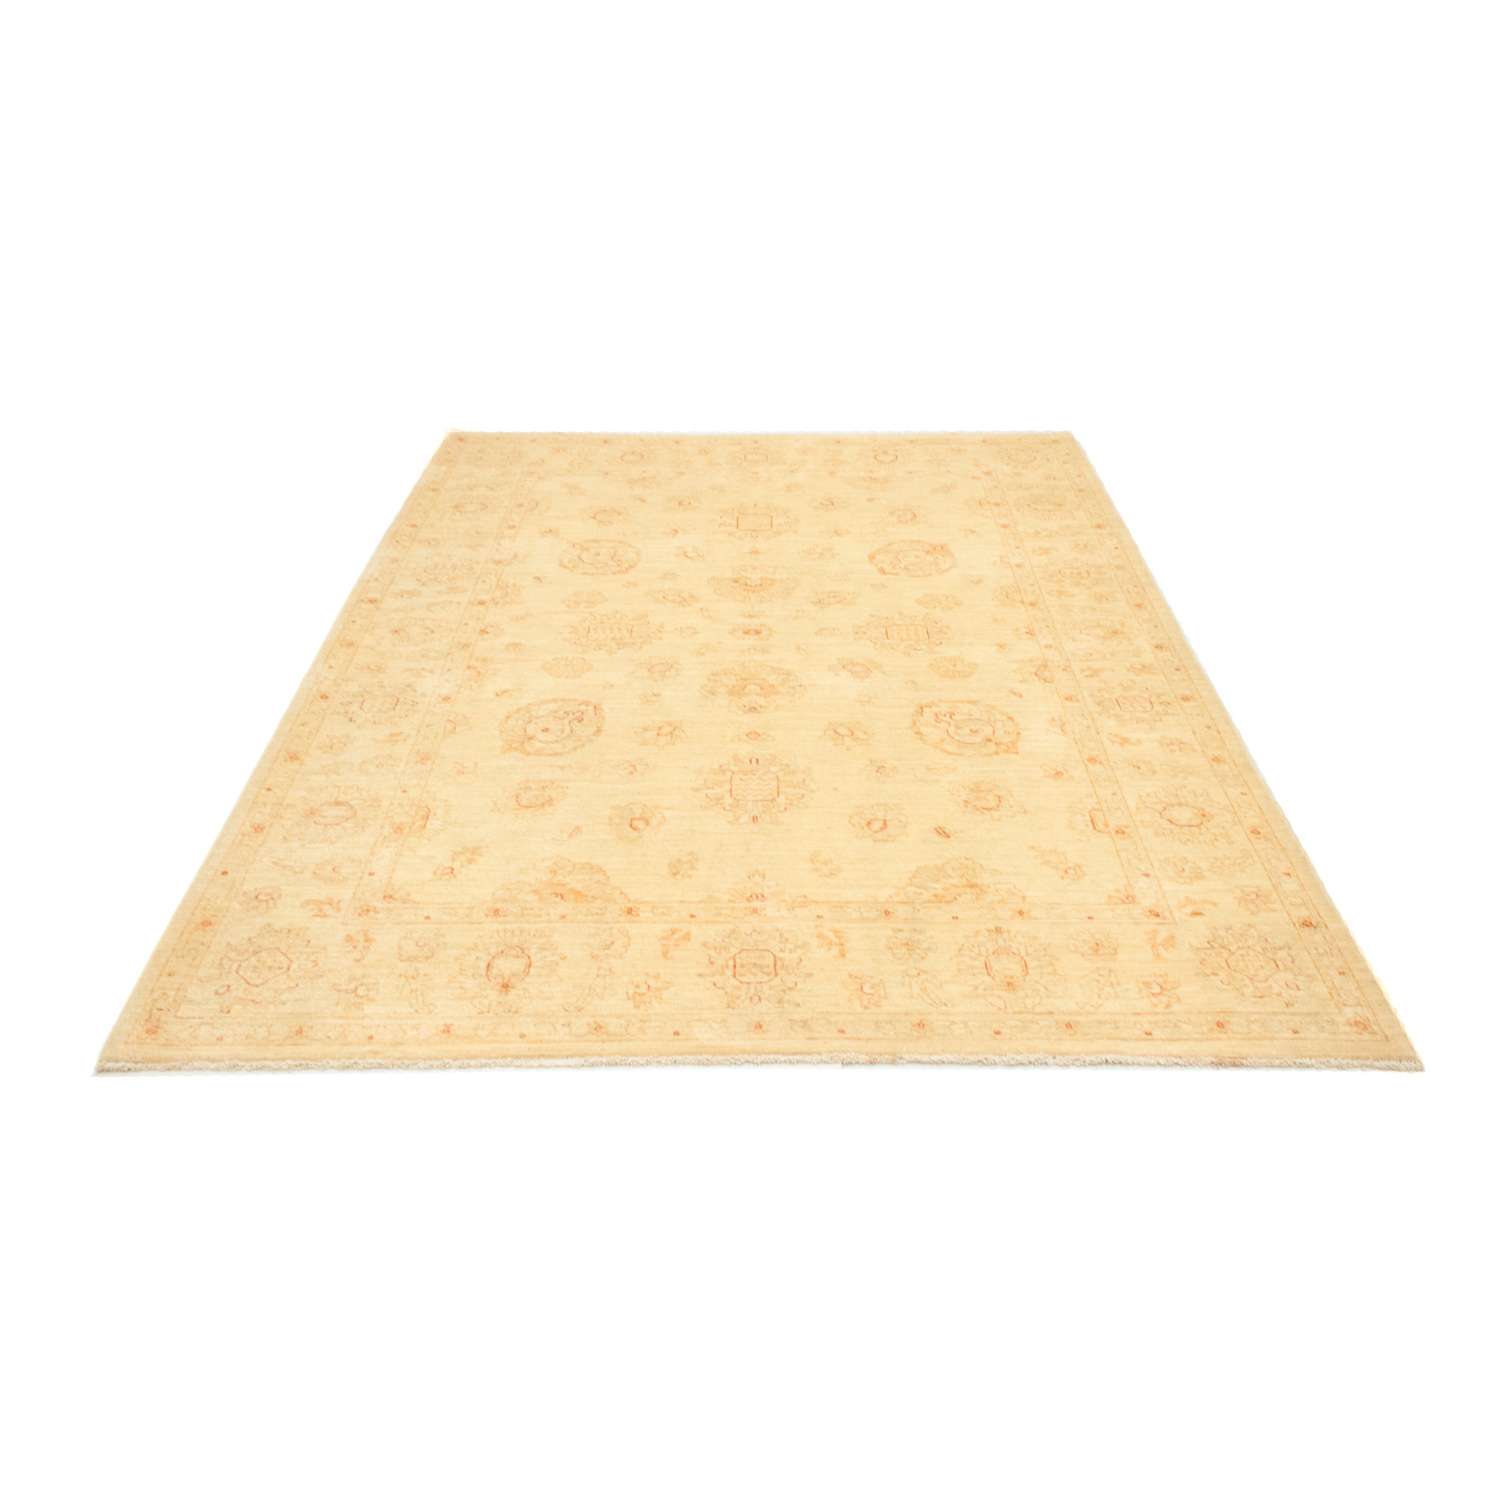 Ziegler Carpet - 236 x 173 cm - beige